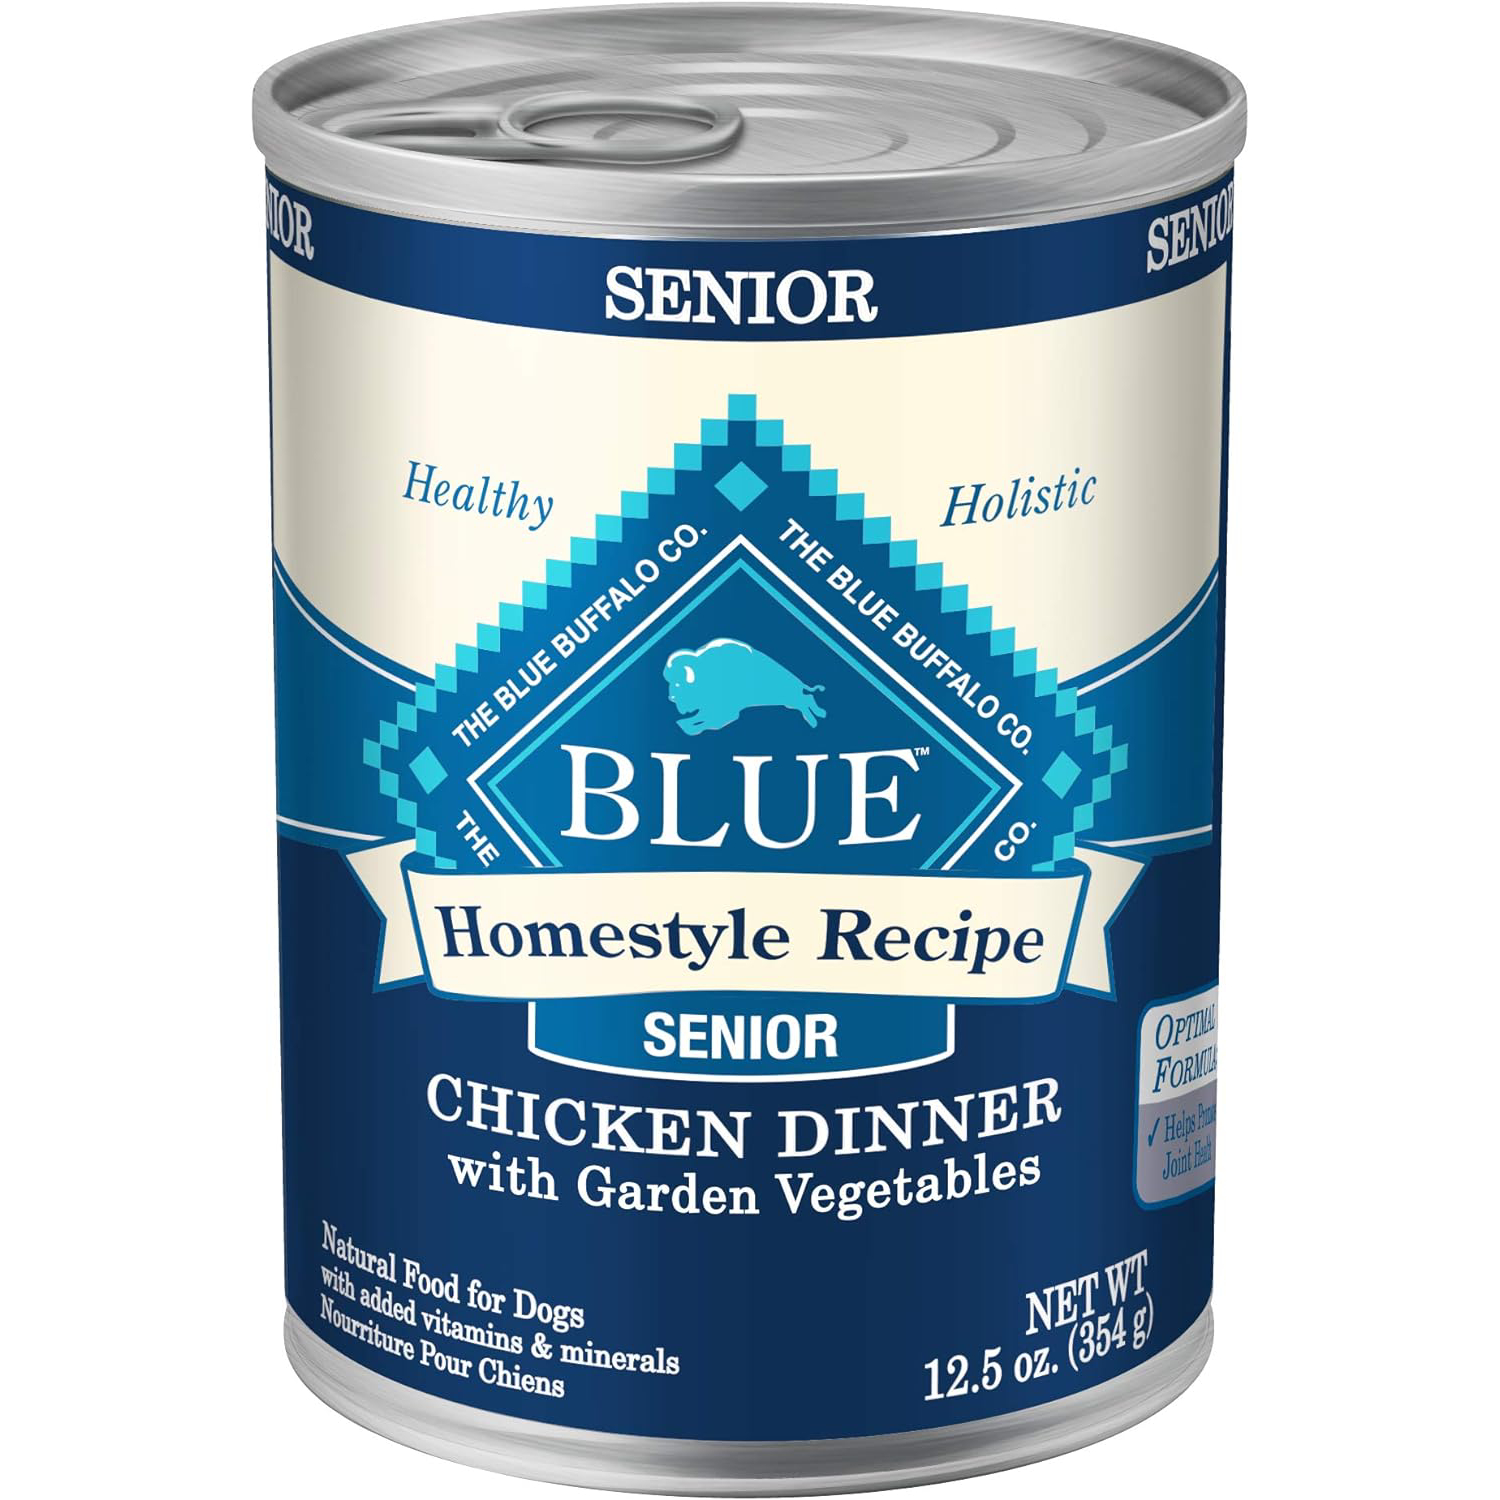 Blue Buffalo Homestyle Recipe Natural Senior Wet Dog Food